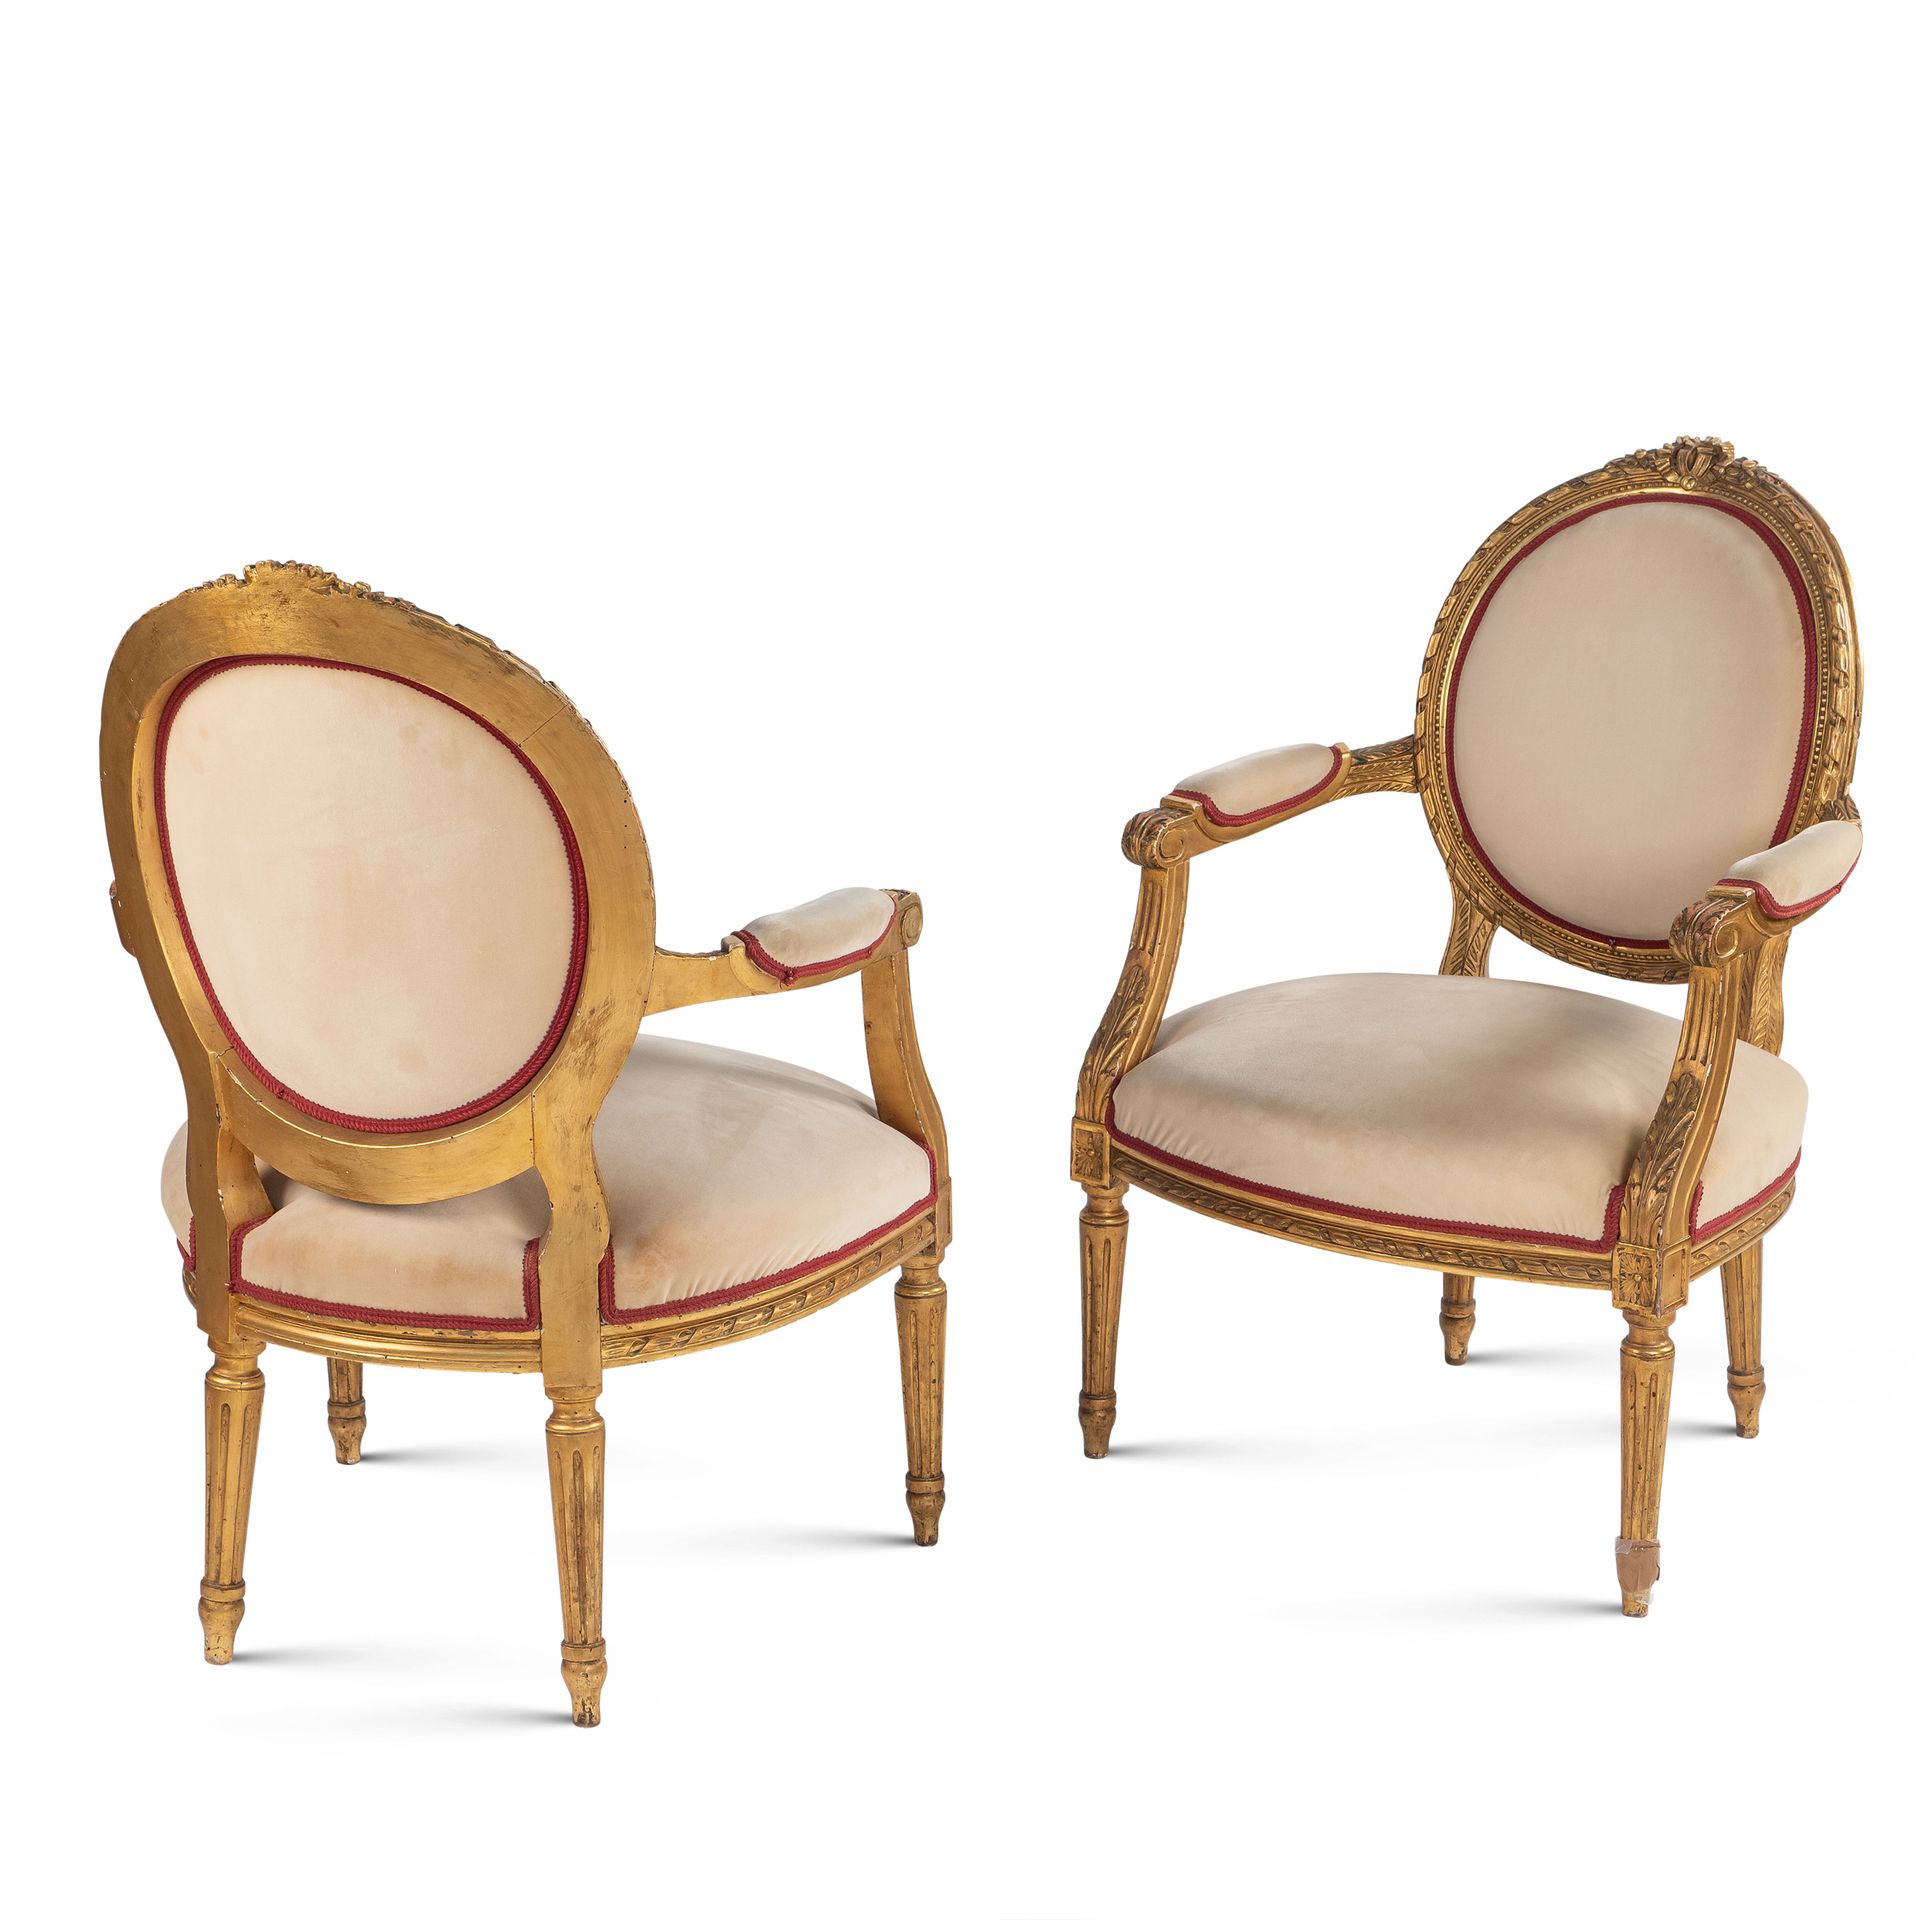 Pair of gilt wood armchairs France, 19th-20th century 83x63x56 cm. Sedili e schi&hellip;